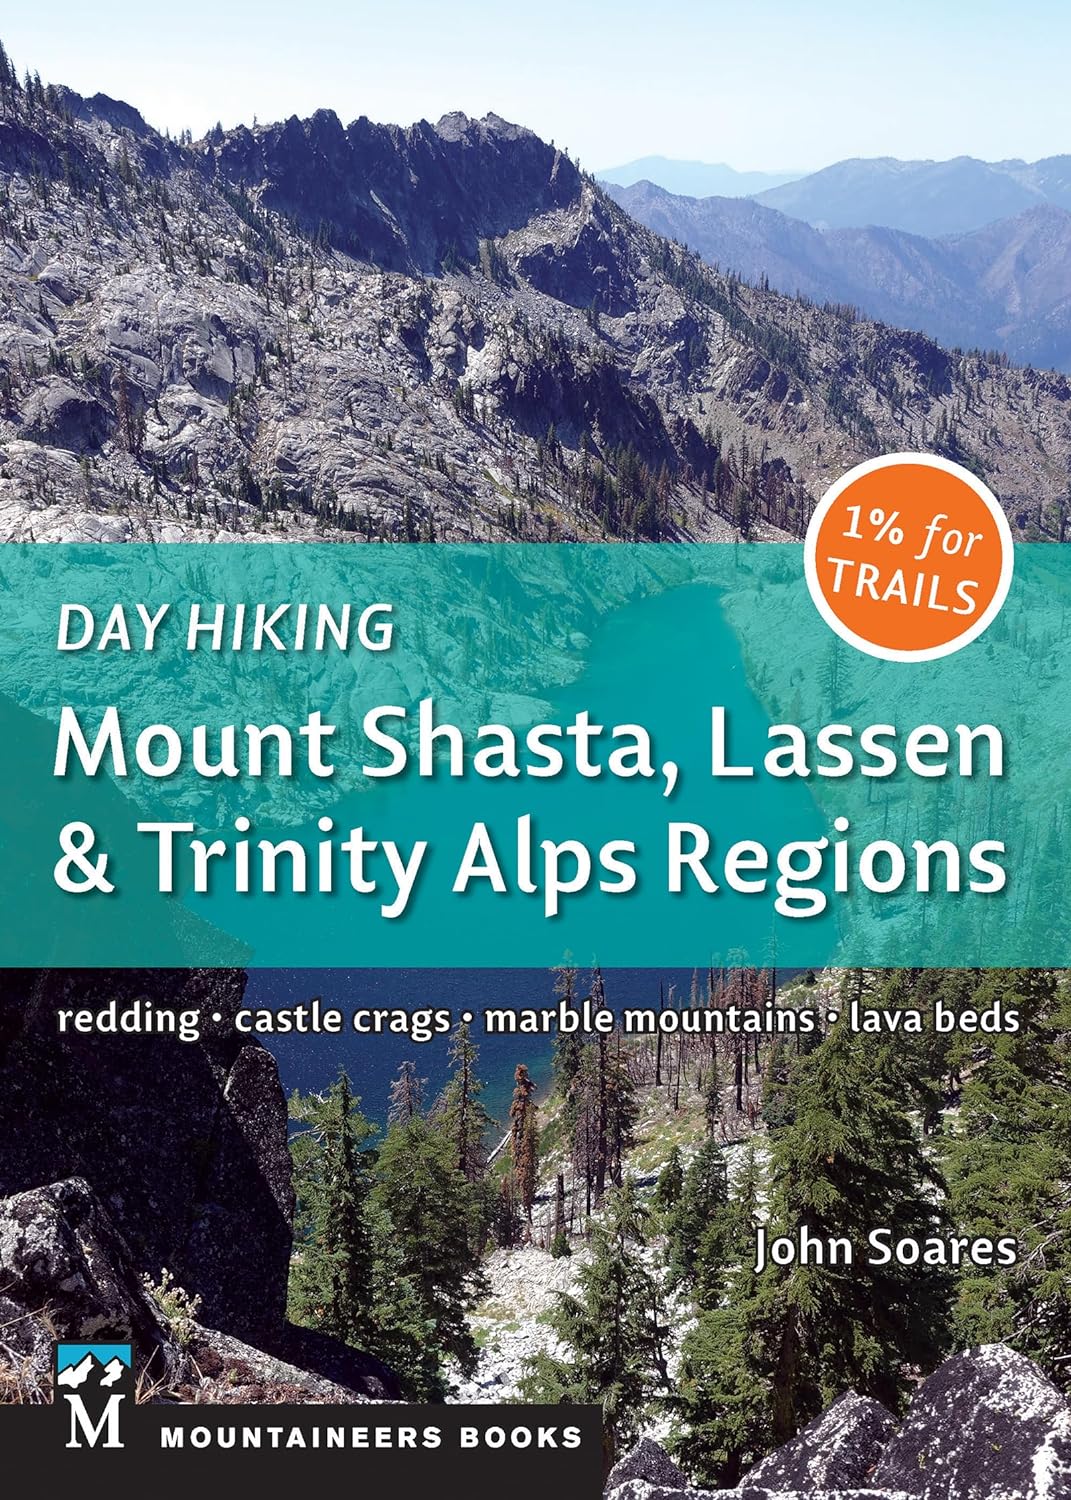 Day hiking Mt Shasta book